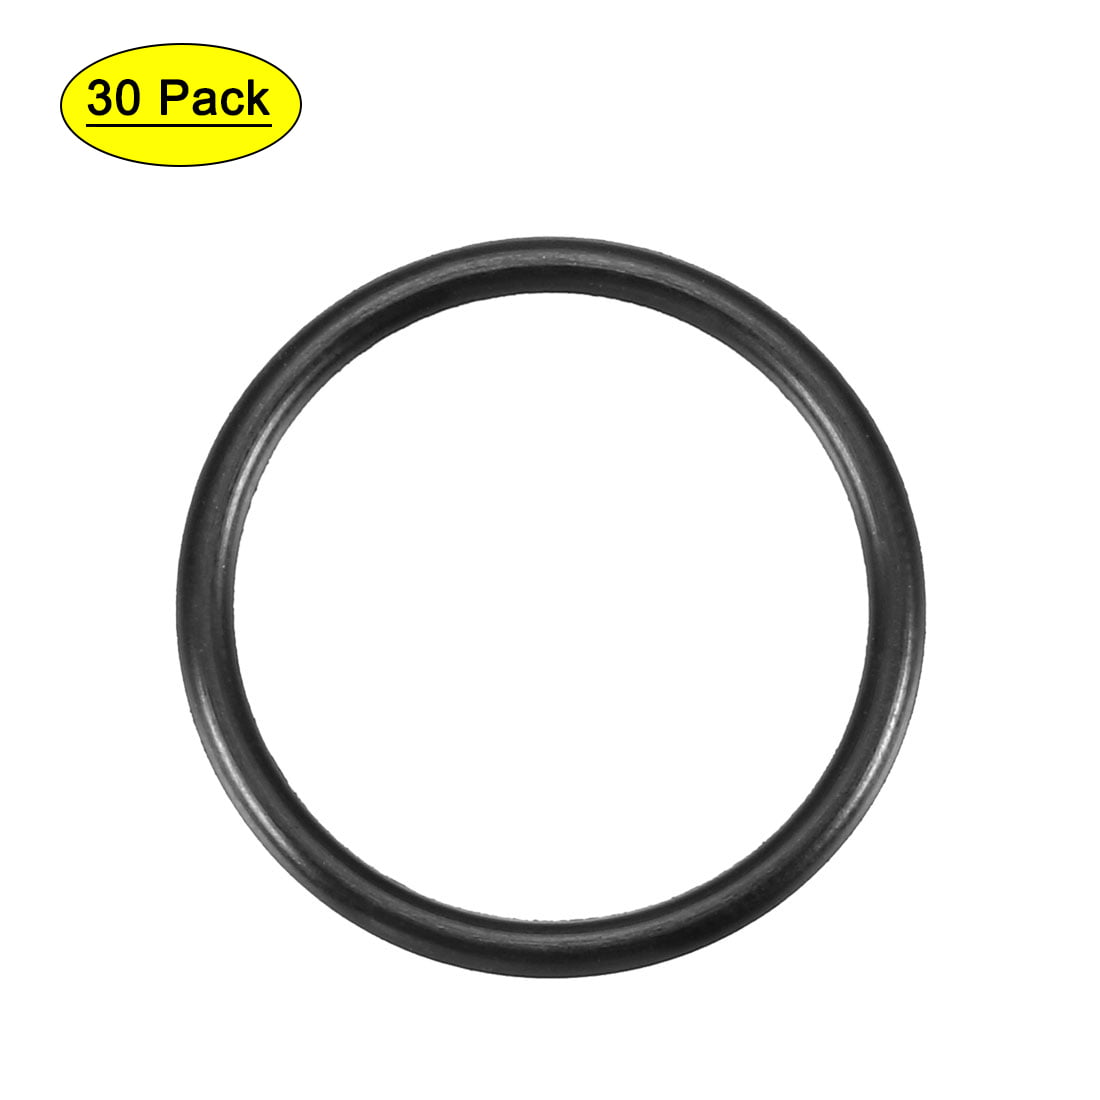 Details about   30 Pcs Black 26mmx1.9mm Oil Resistant Sealing Ring O-shape NBR Rubber Grommets 